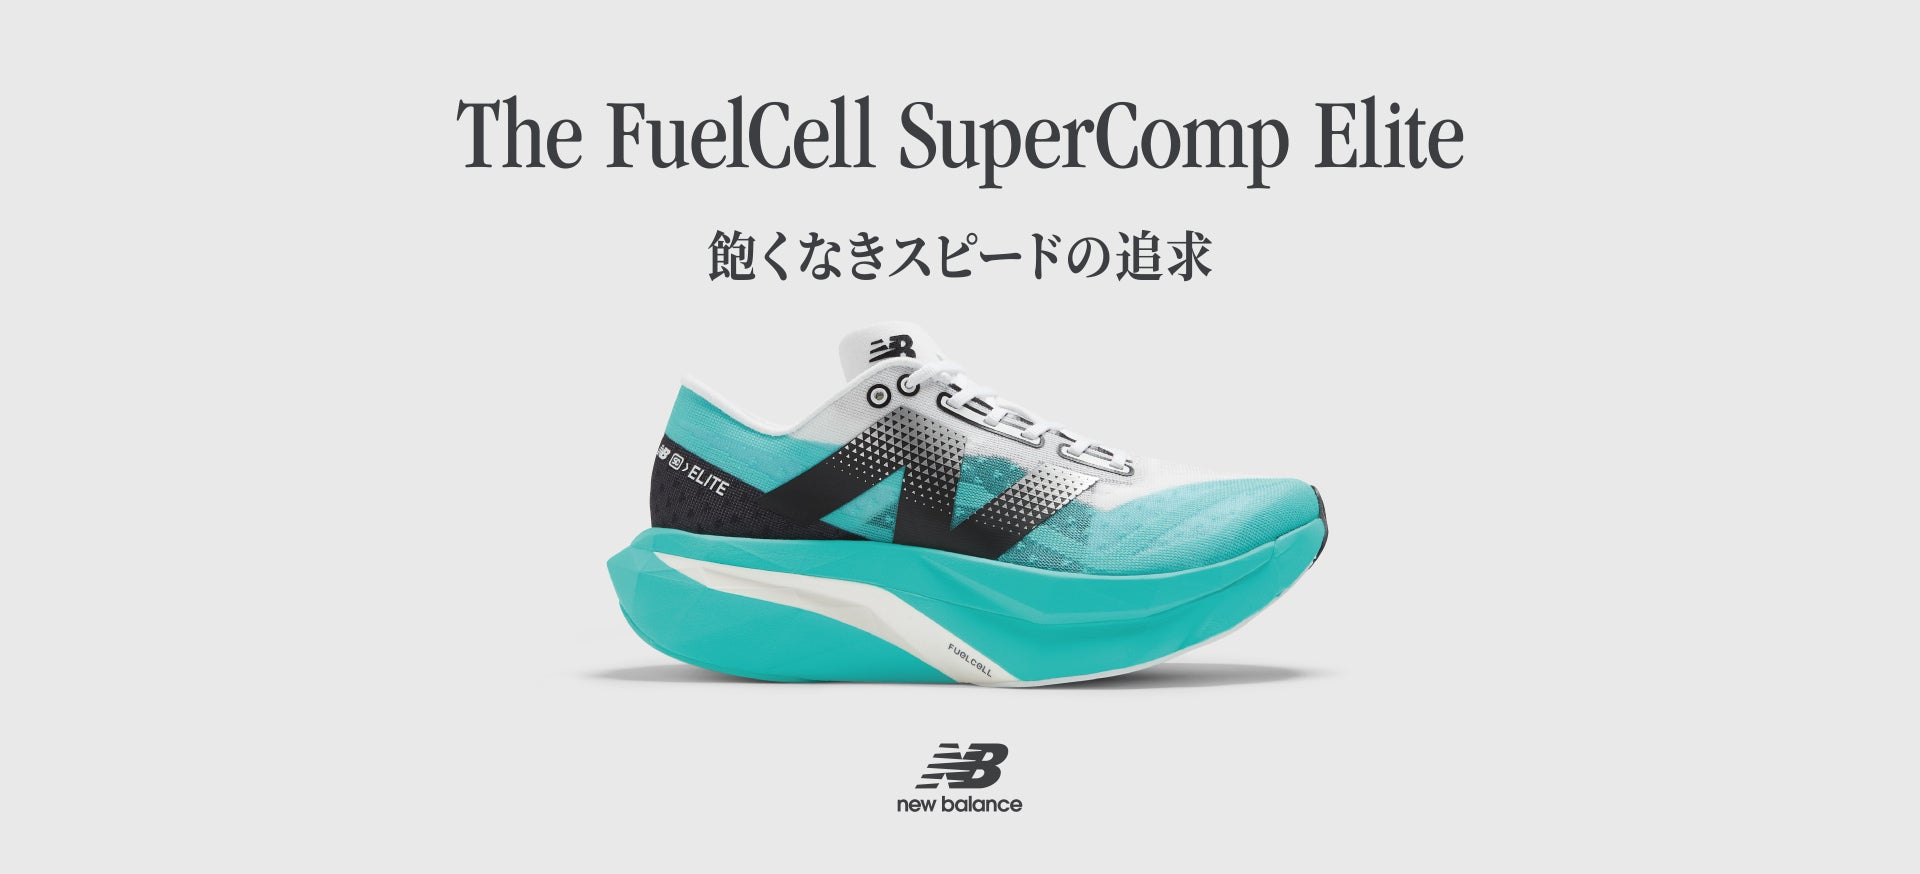 uelCell SuperComp Elite 飽くなきスピードの追求